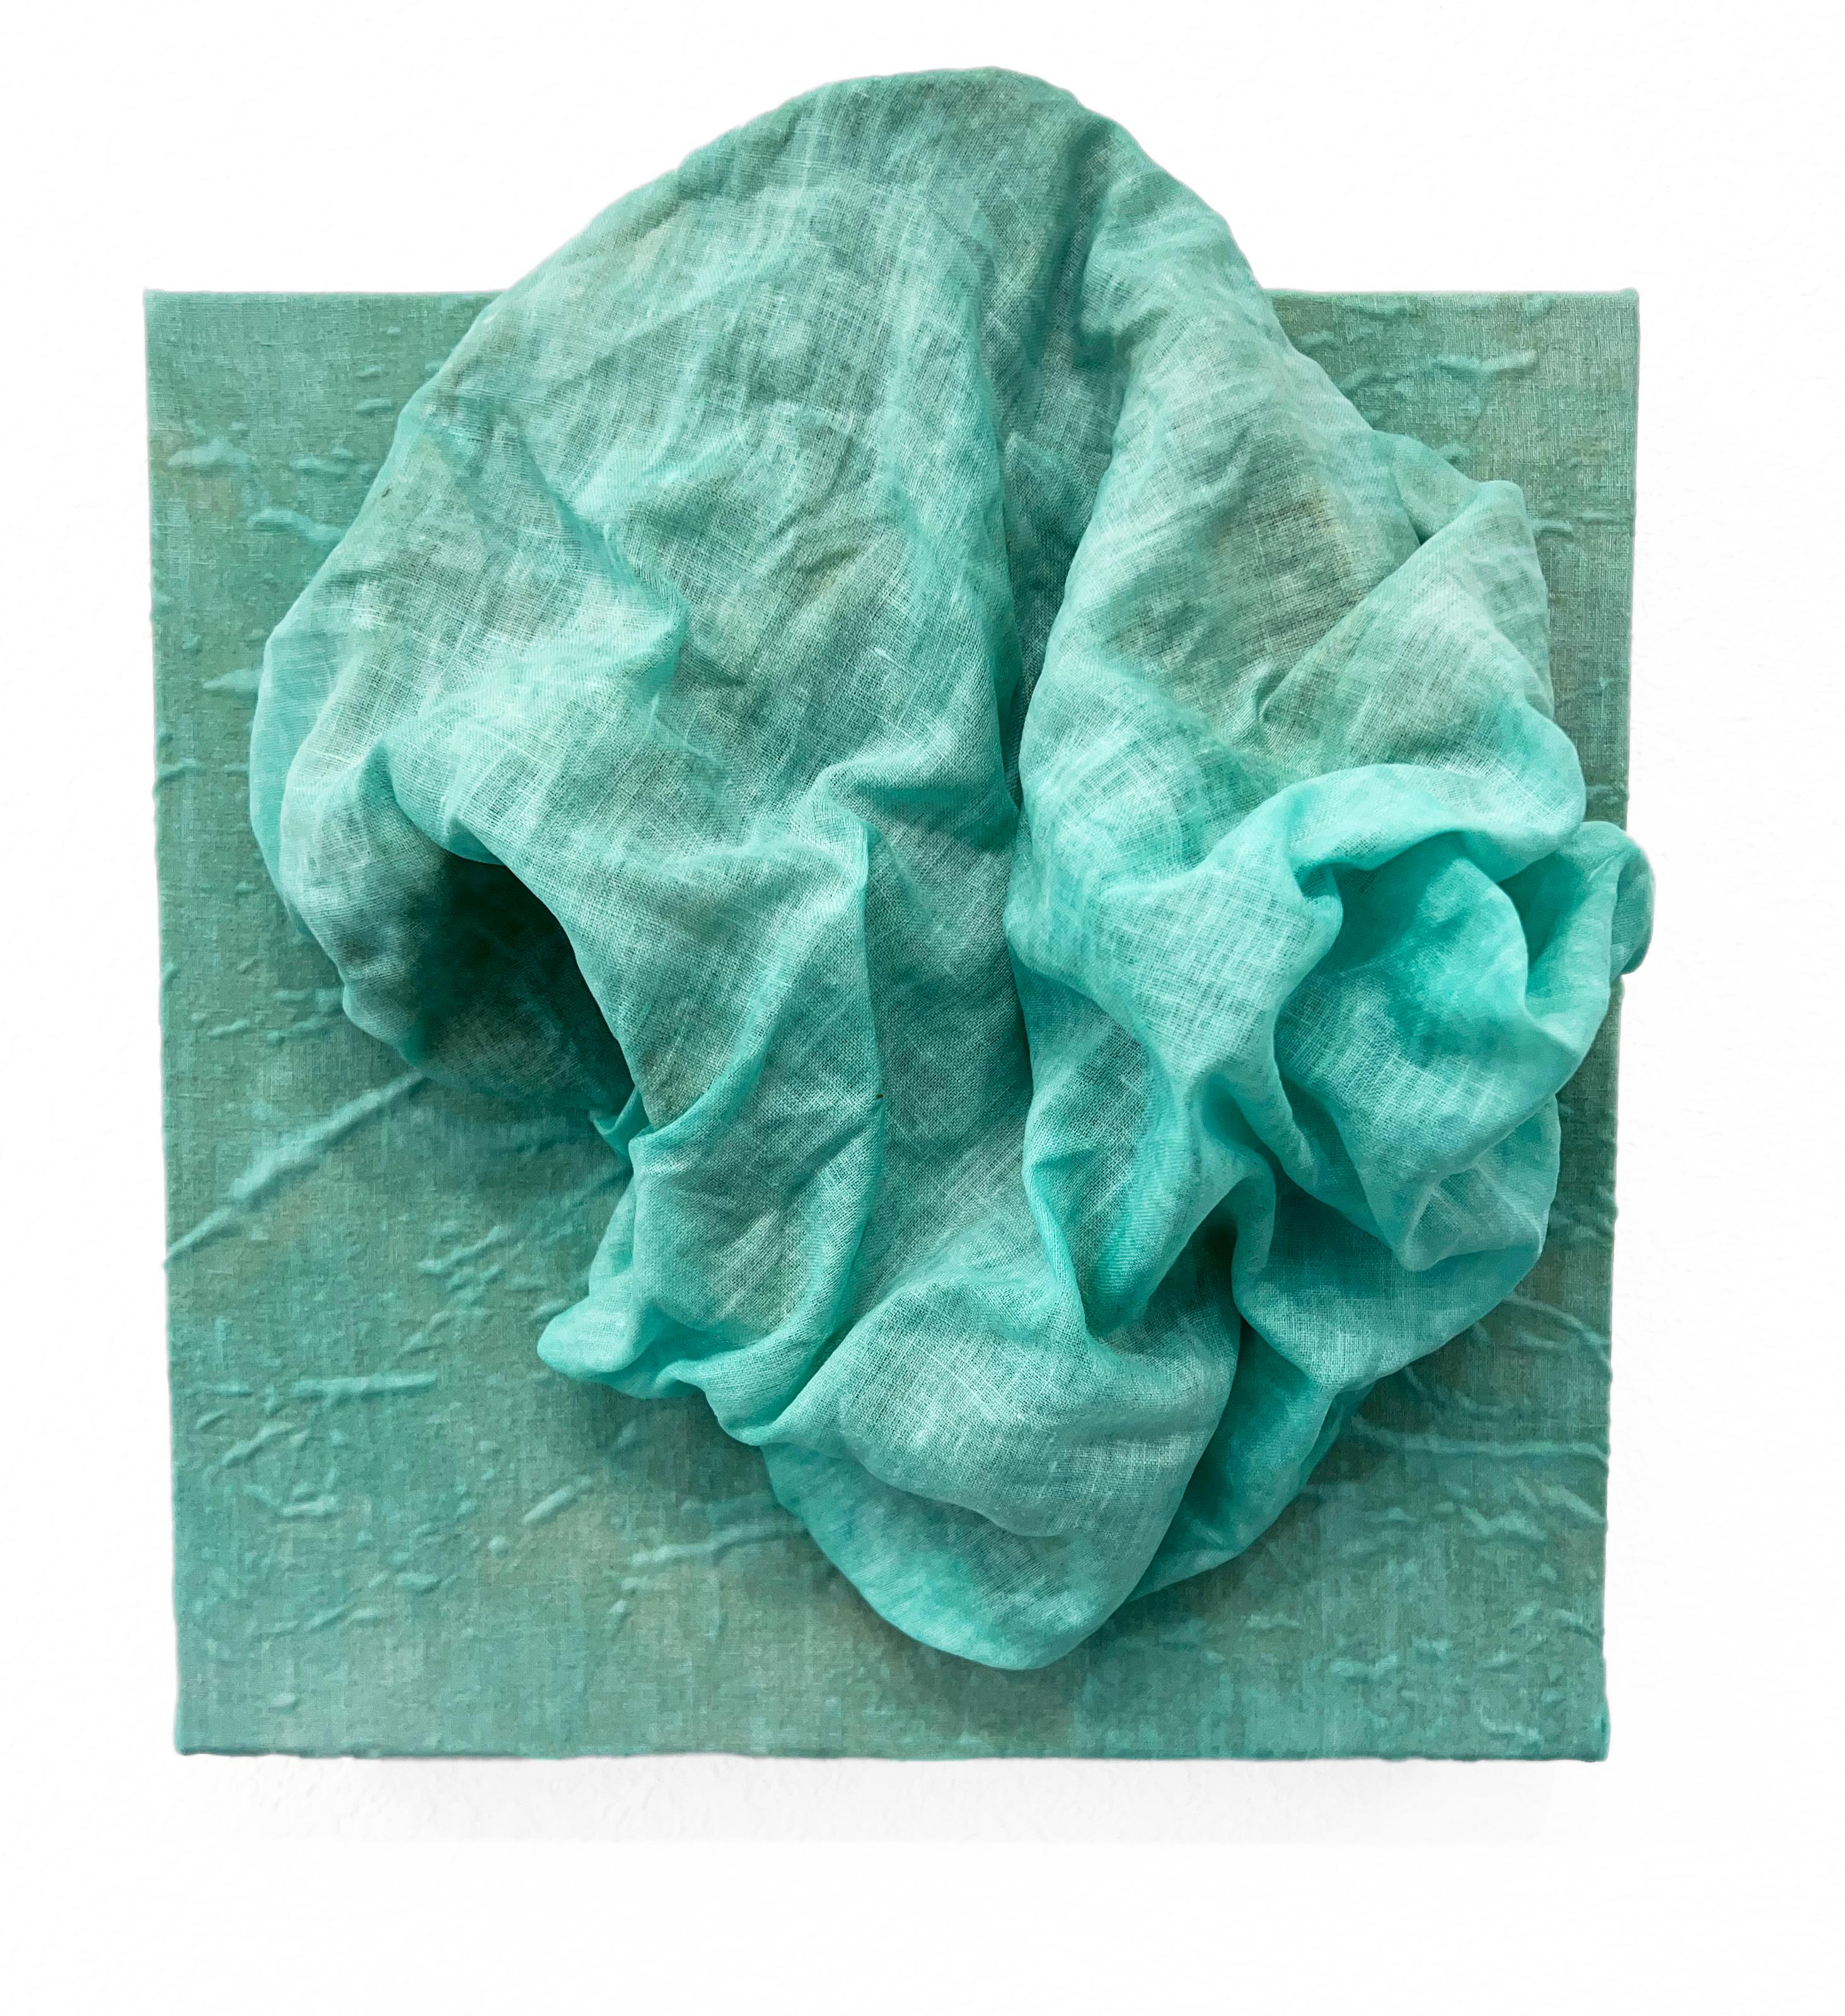 "Celadon 1" Wall sculpture- fabric, monochrome, monochromatic, elegant, bold - Mixed Media Art by Chloe Hedden